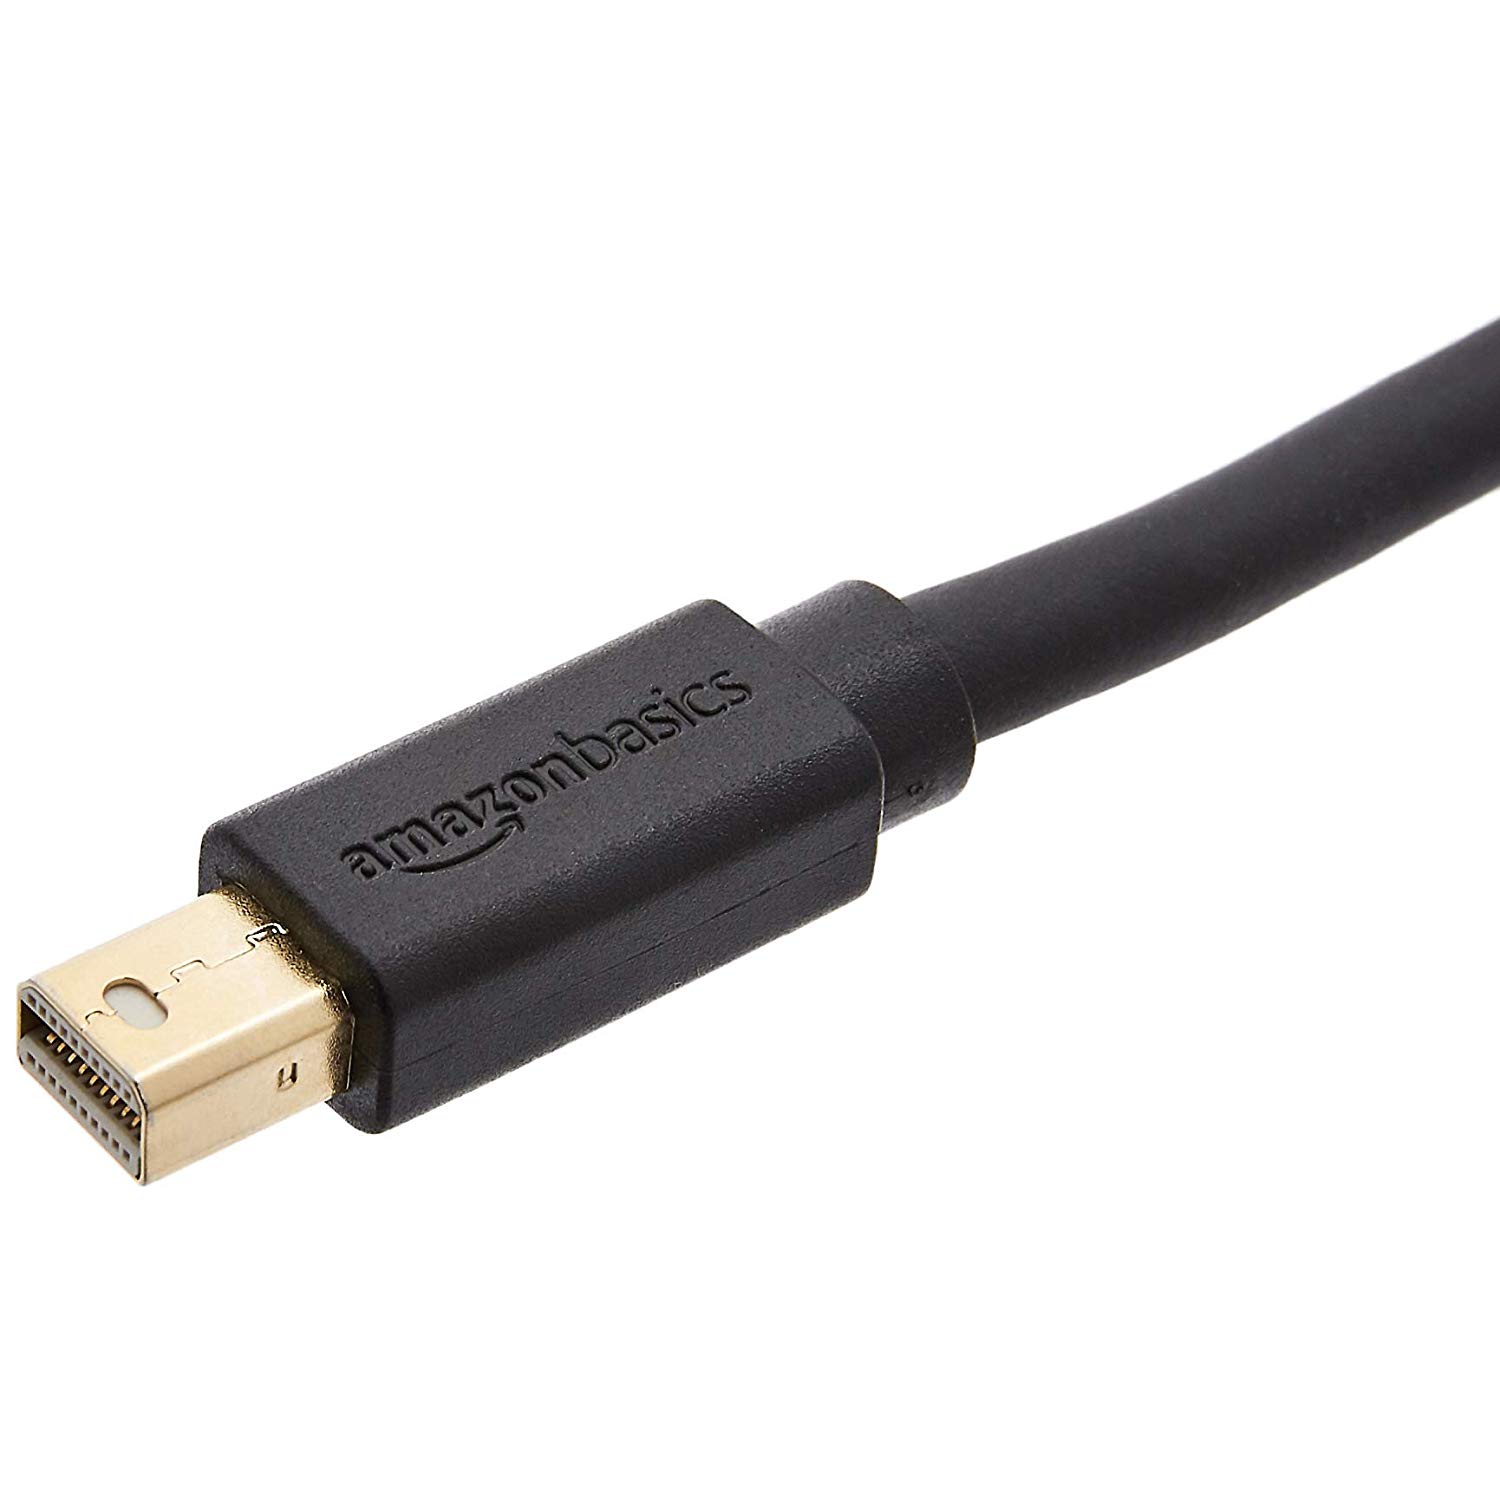 AmazonBasics Mini DisplayPort to HDMI Display Adapter Cable - 6 Feet.